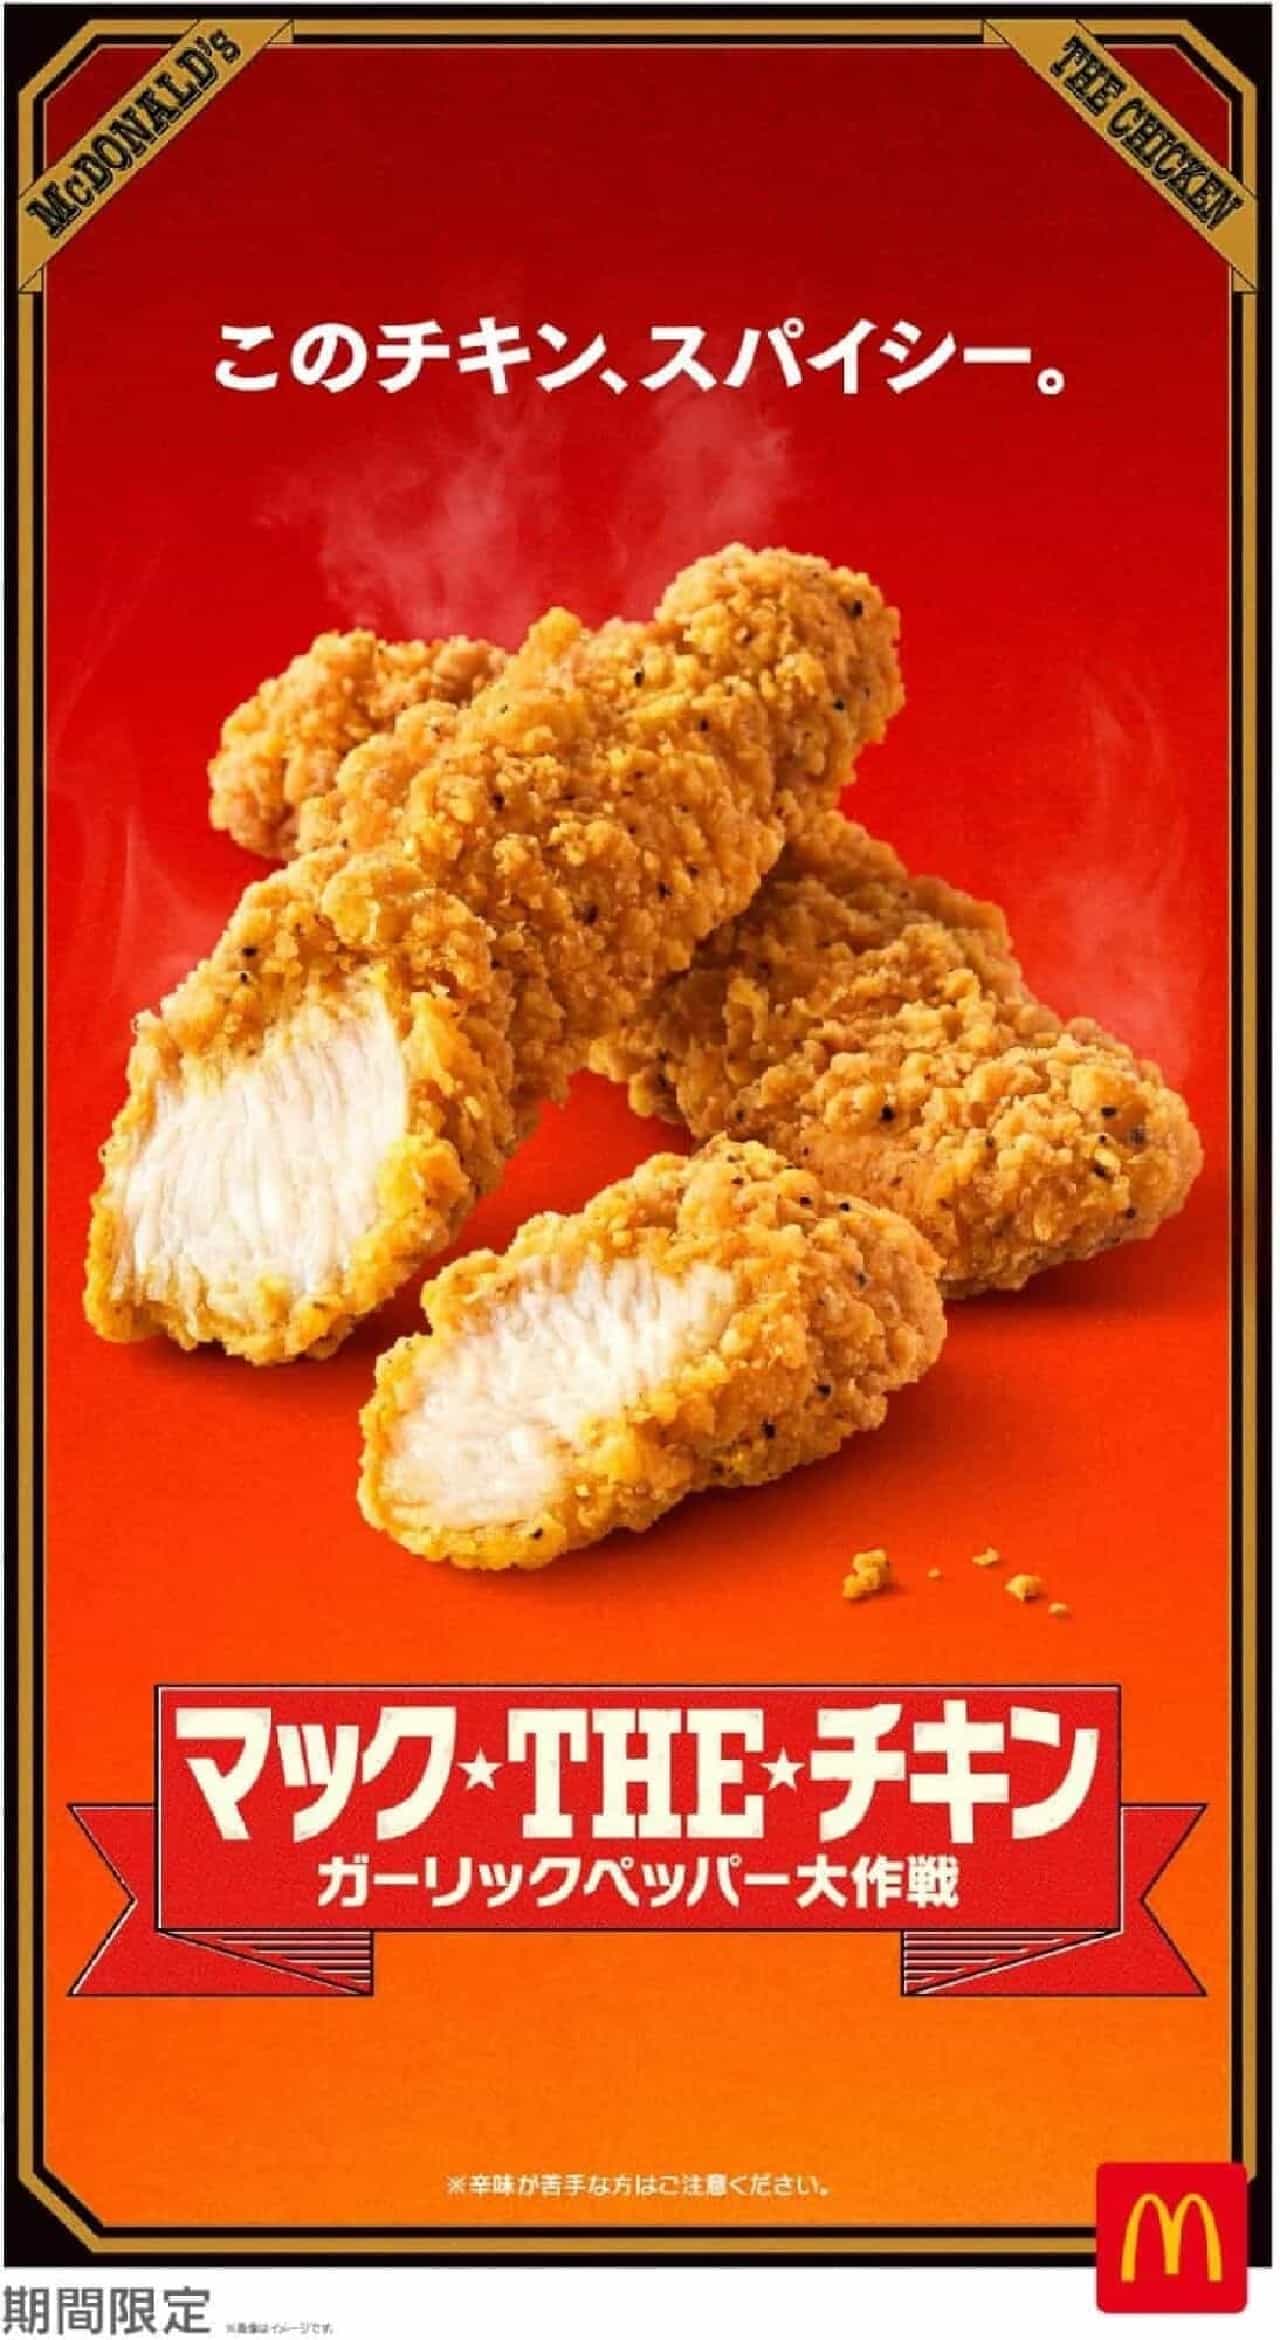 McDonald's "McThe Chicken Garlic Pepper